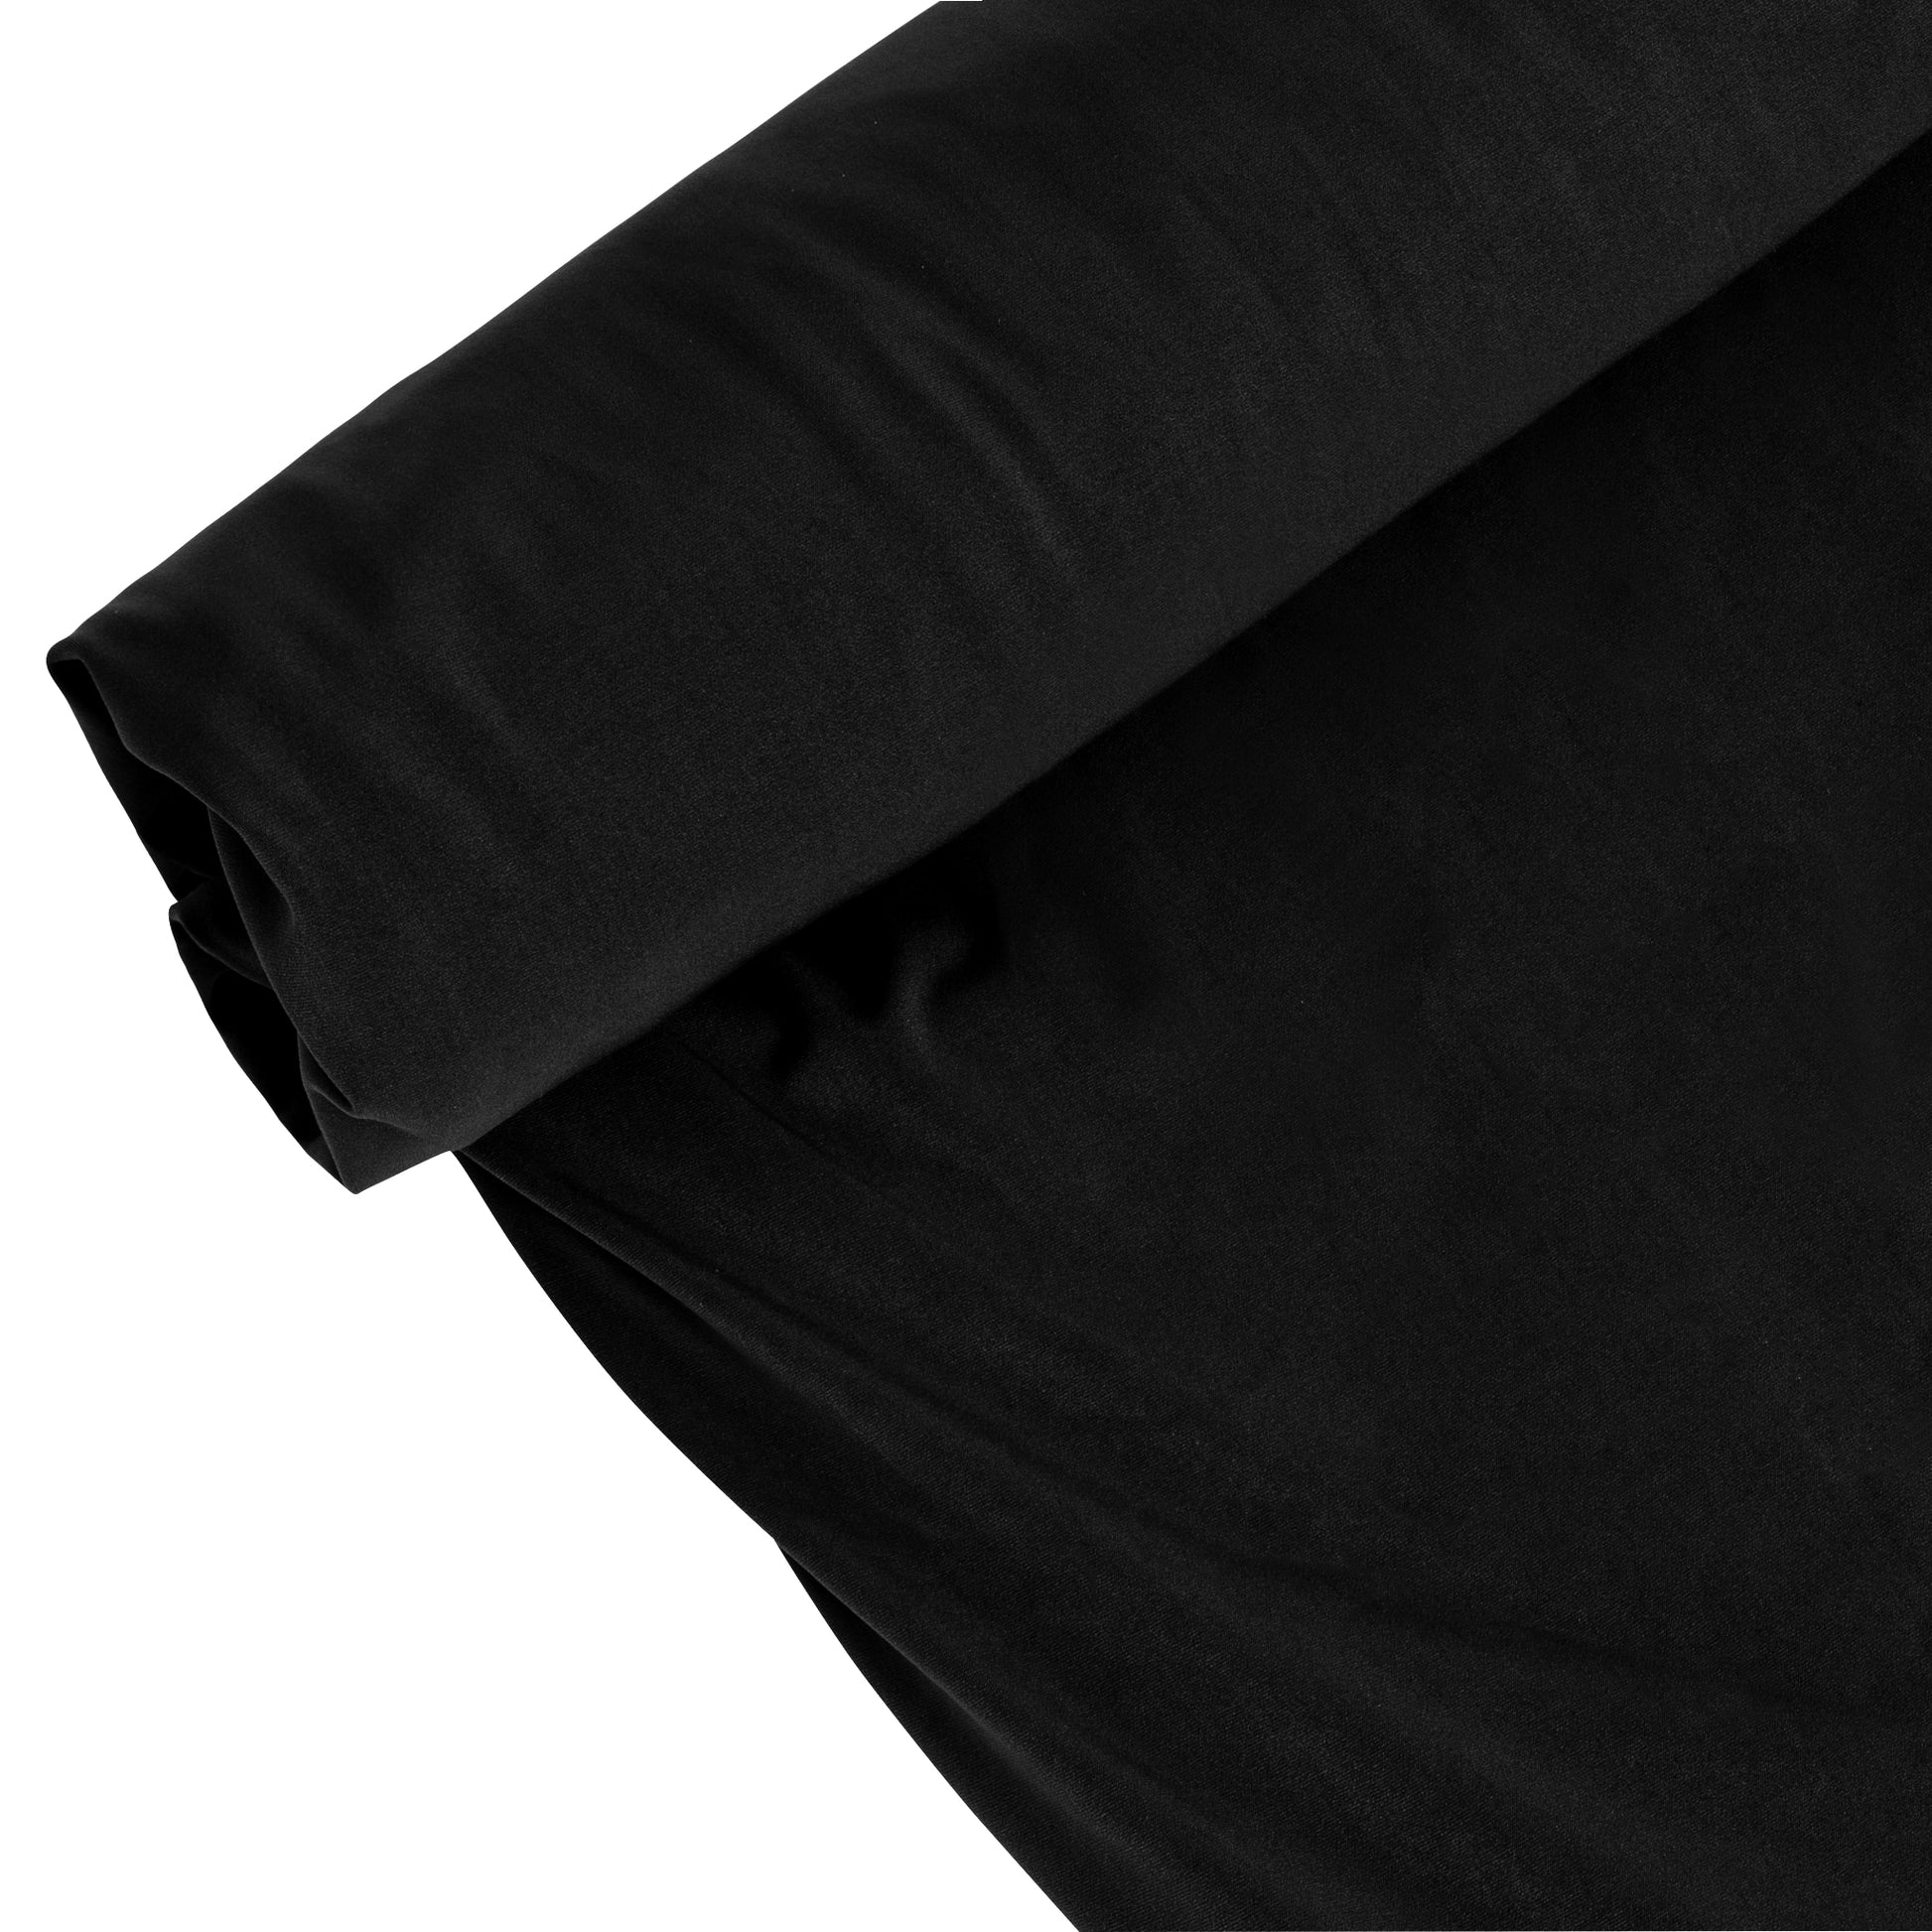 Spandex Stretch 4-way Fabric Roll 10 yds by 58 Black Wholesale